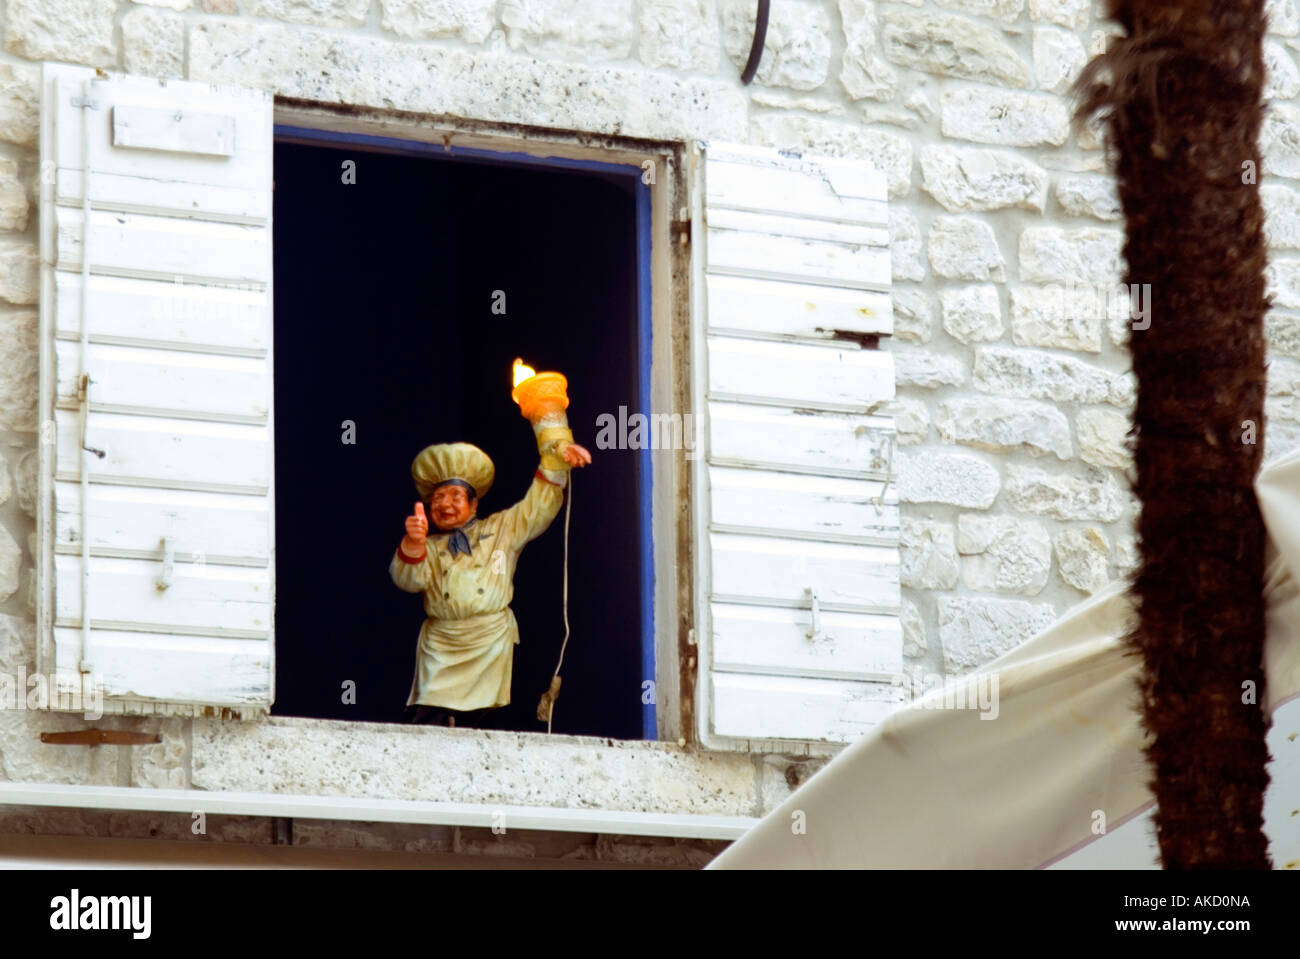 South-East Europe, Croatia, Dalmatia, Trogir, chef figurine in open window with wooden shutters Stock Photo